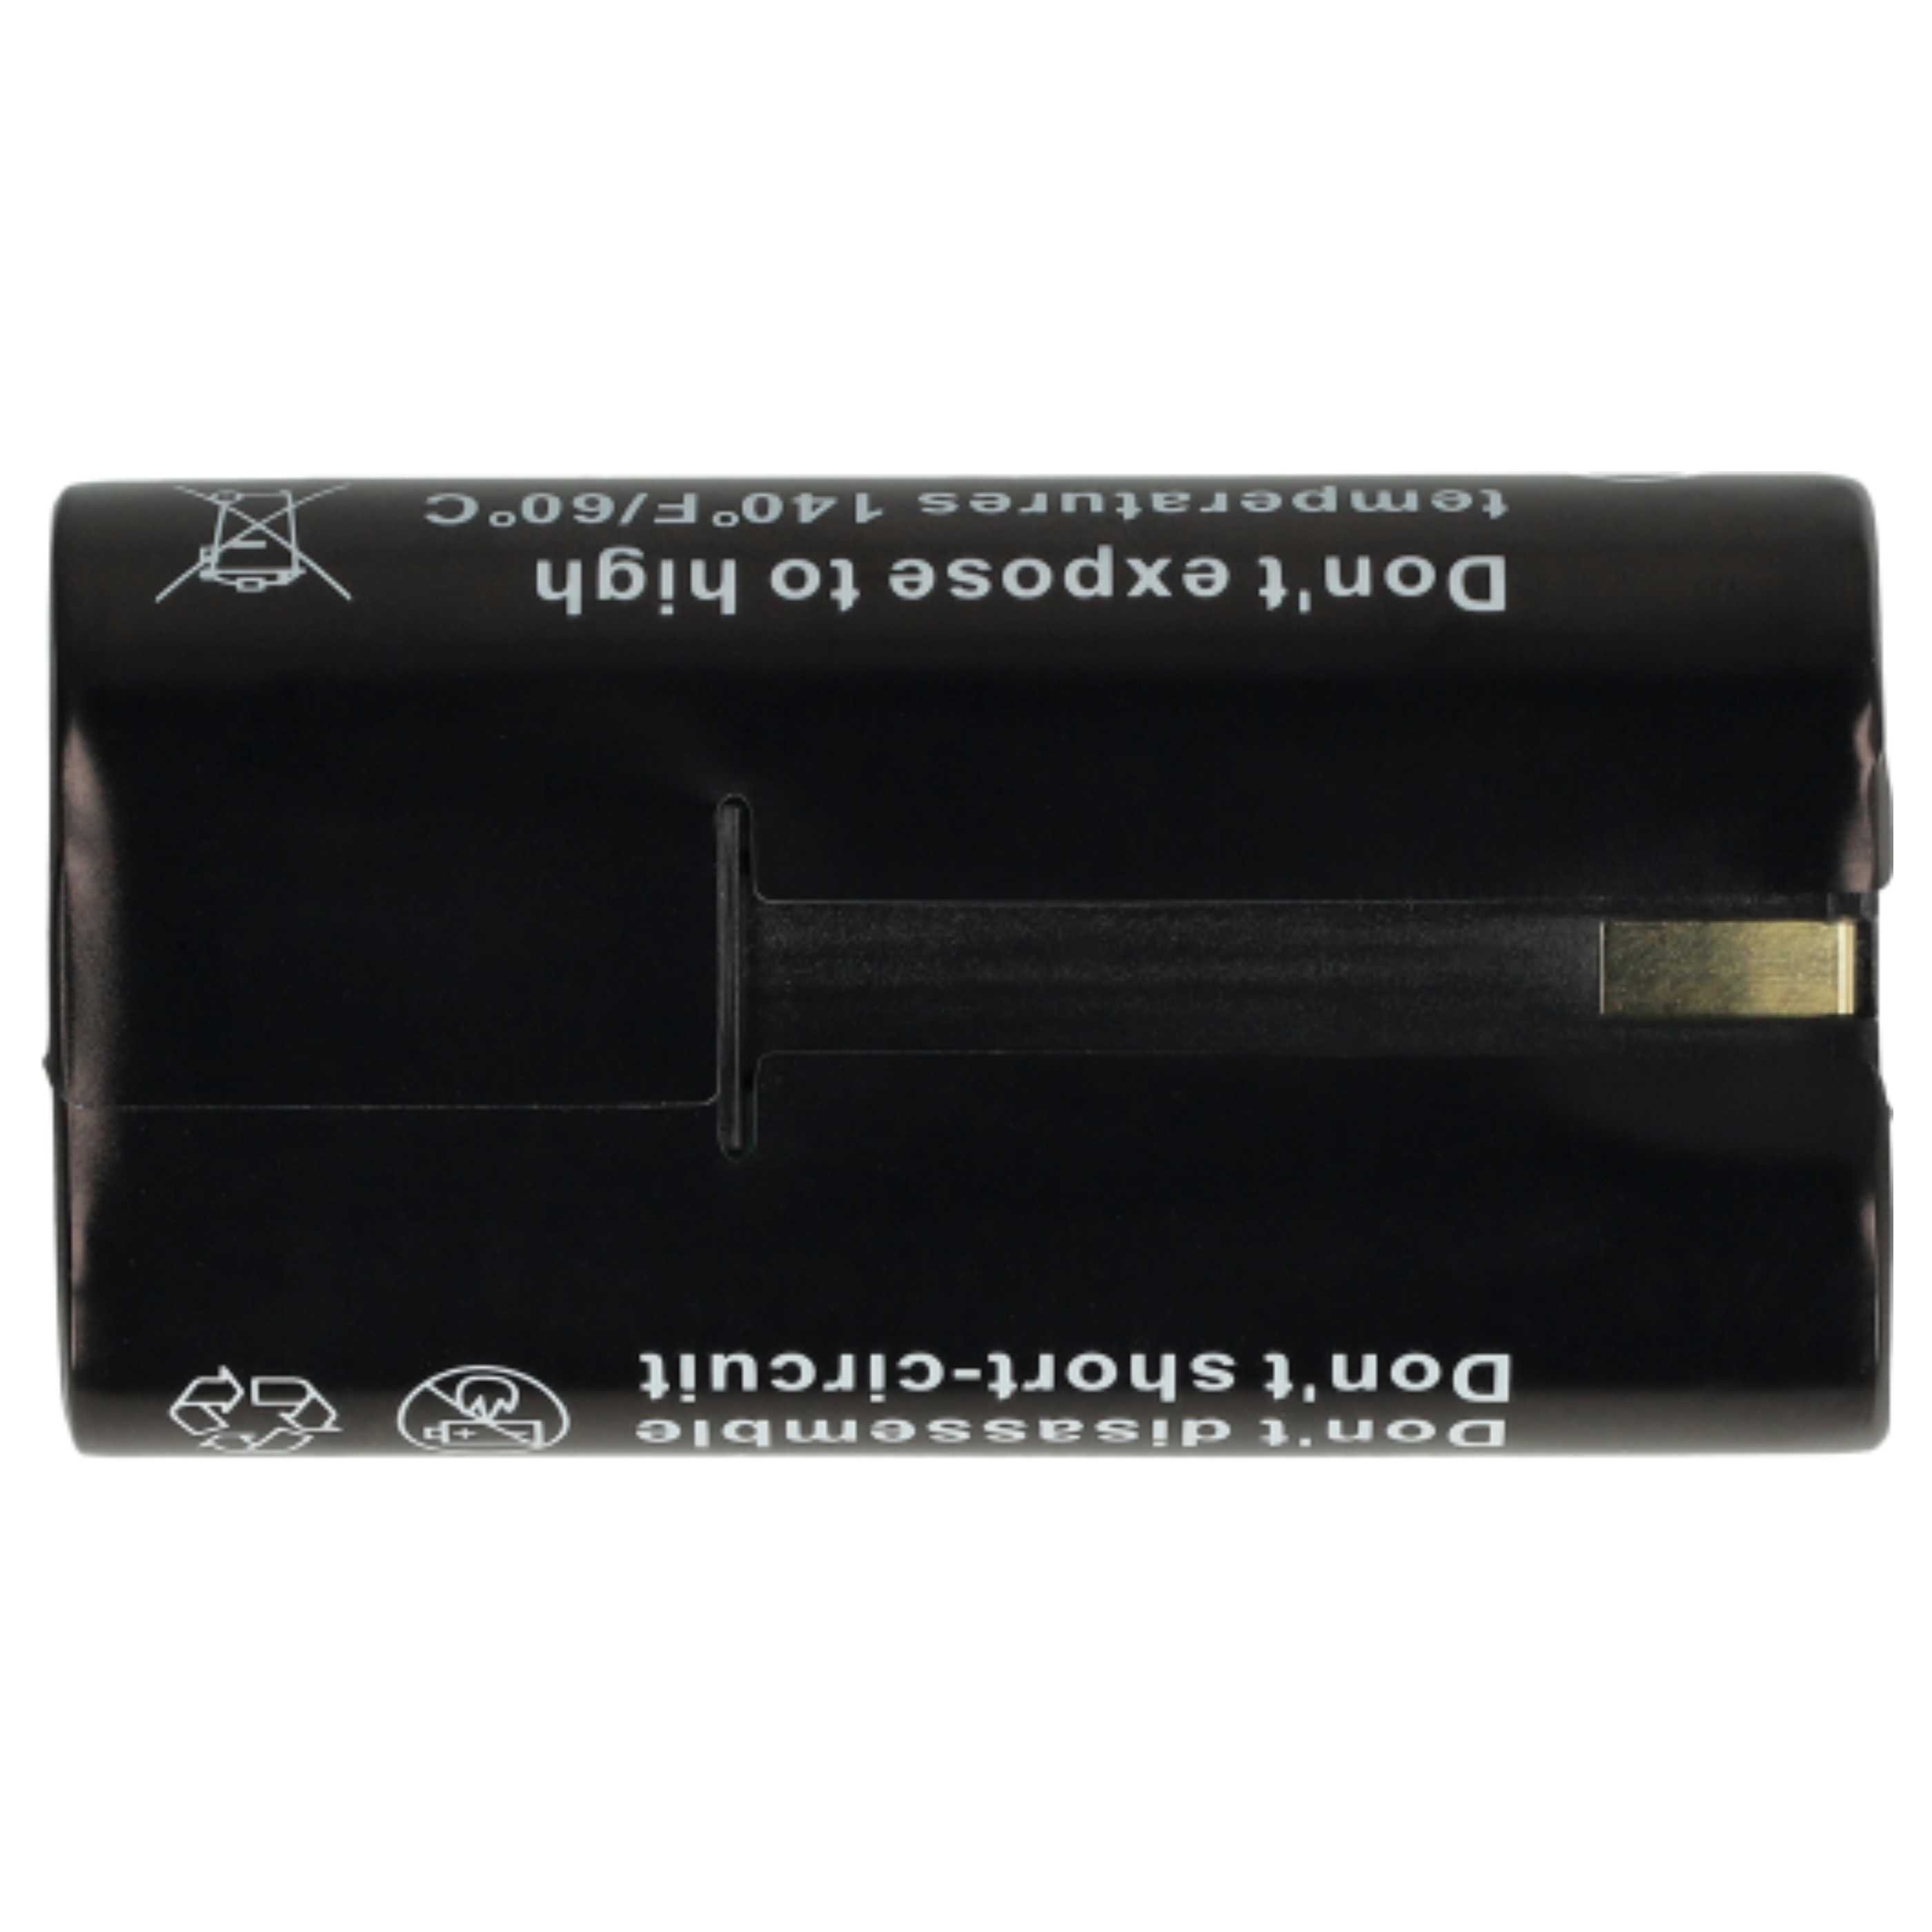 Akumulator do aparatu cyfrowego zamiennik Ricoh DB-50 - 1520 mAh 3,6 V Li-Ion